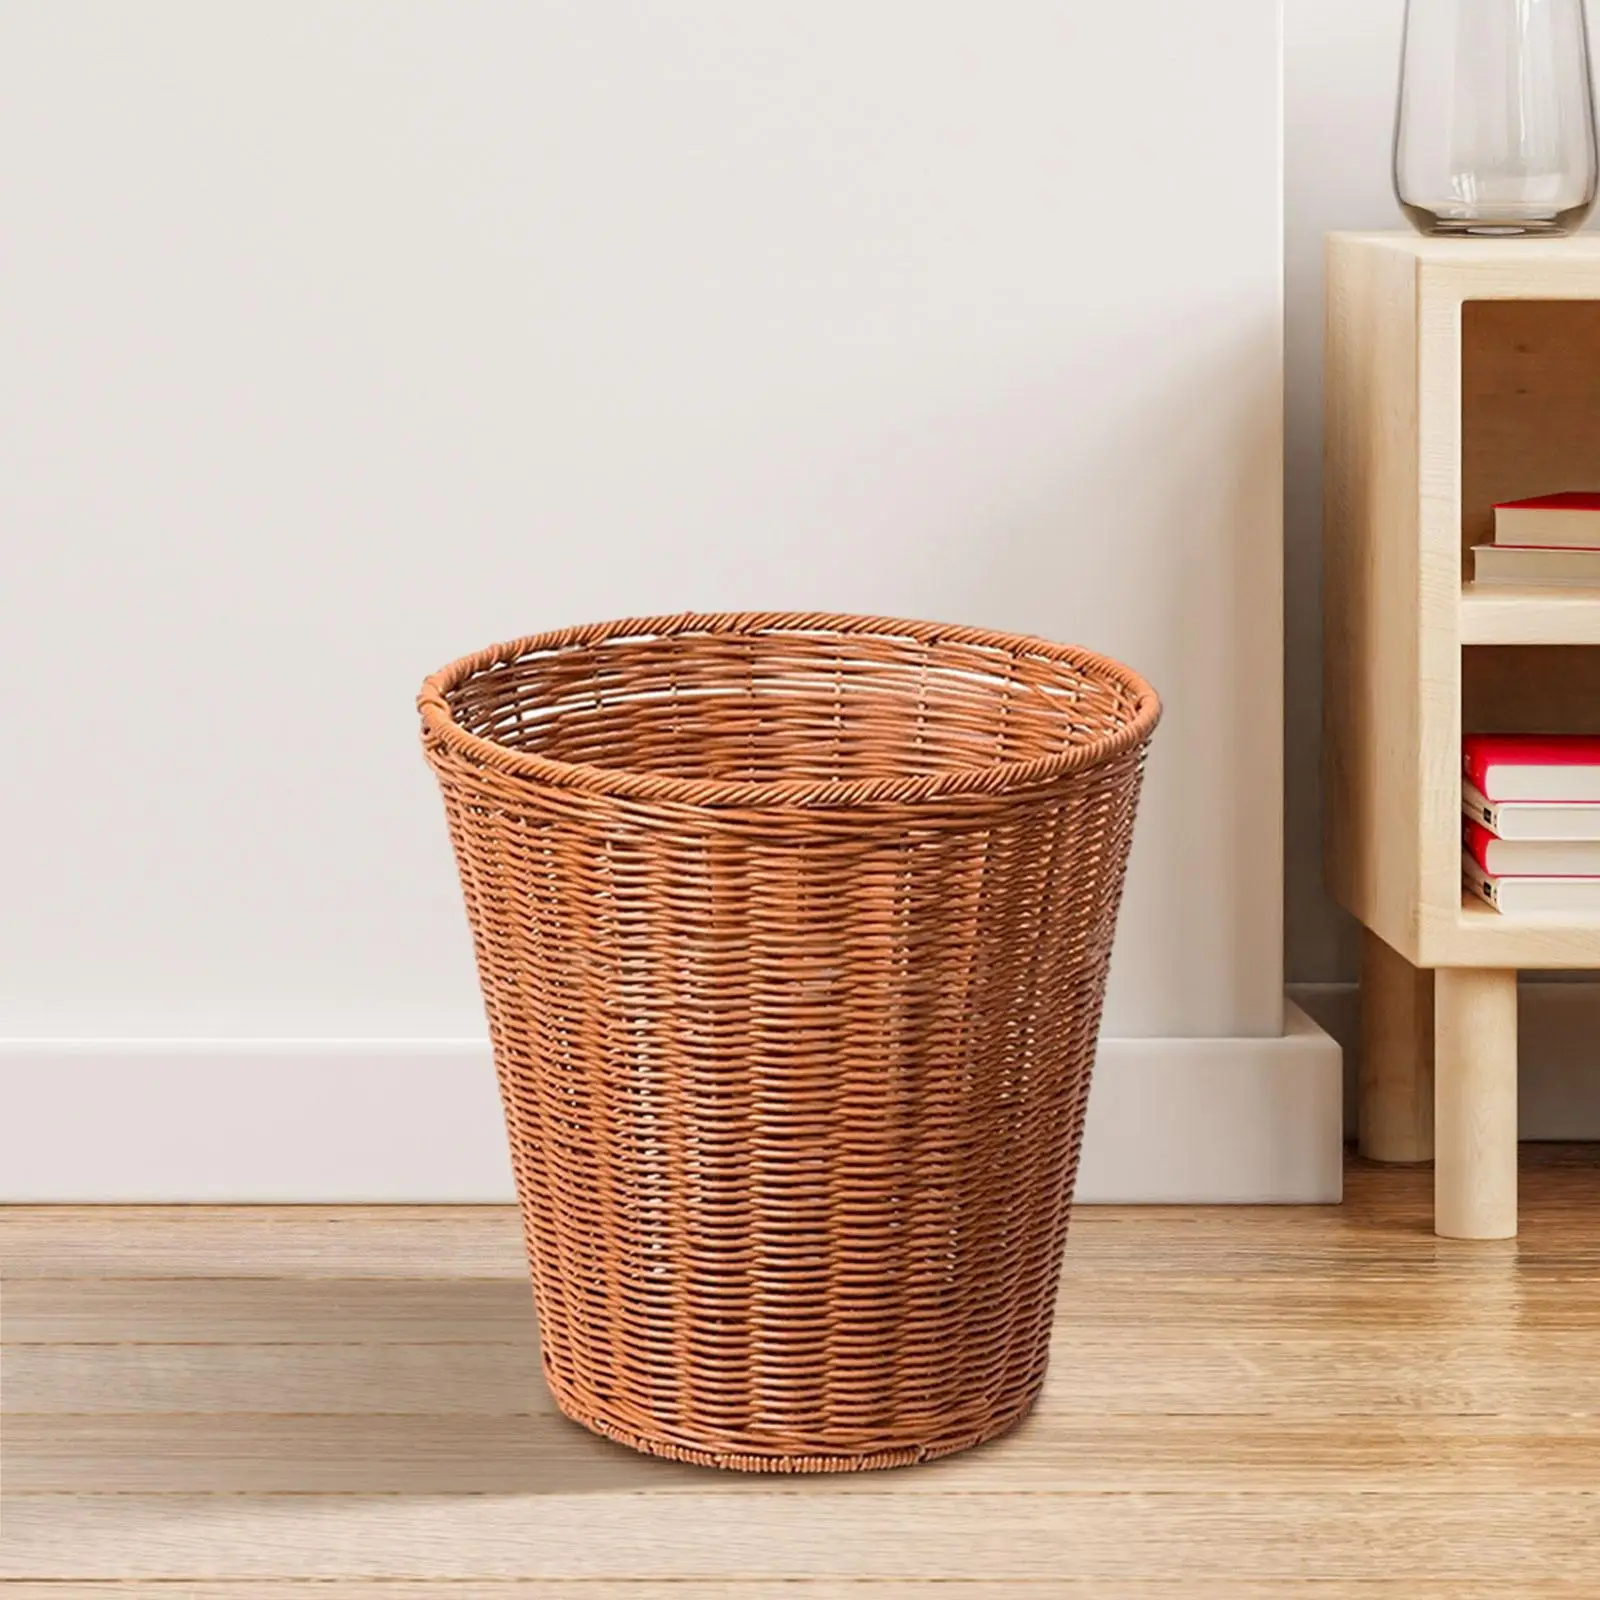 Woven Wastebasket Round Imitation Rattan Waste Basket Wicker Trash Can for Laundry Room Office Bathroom Playroom Bedroom